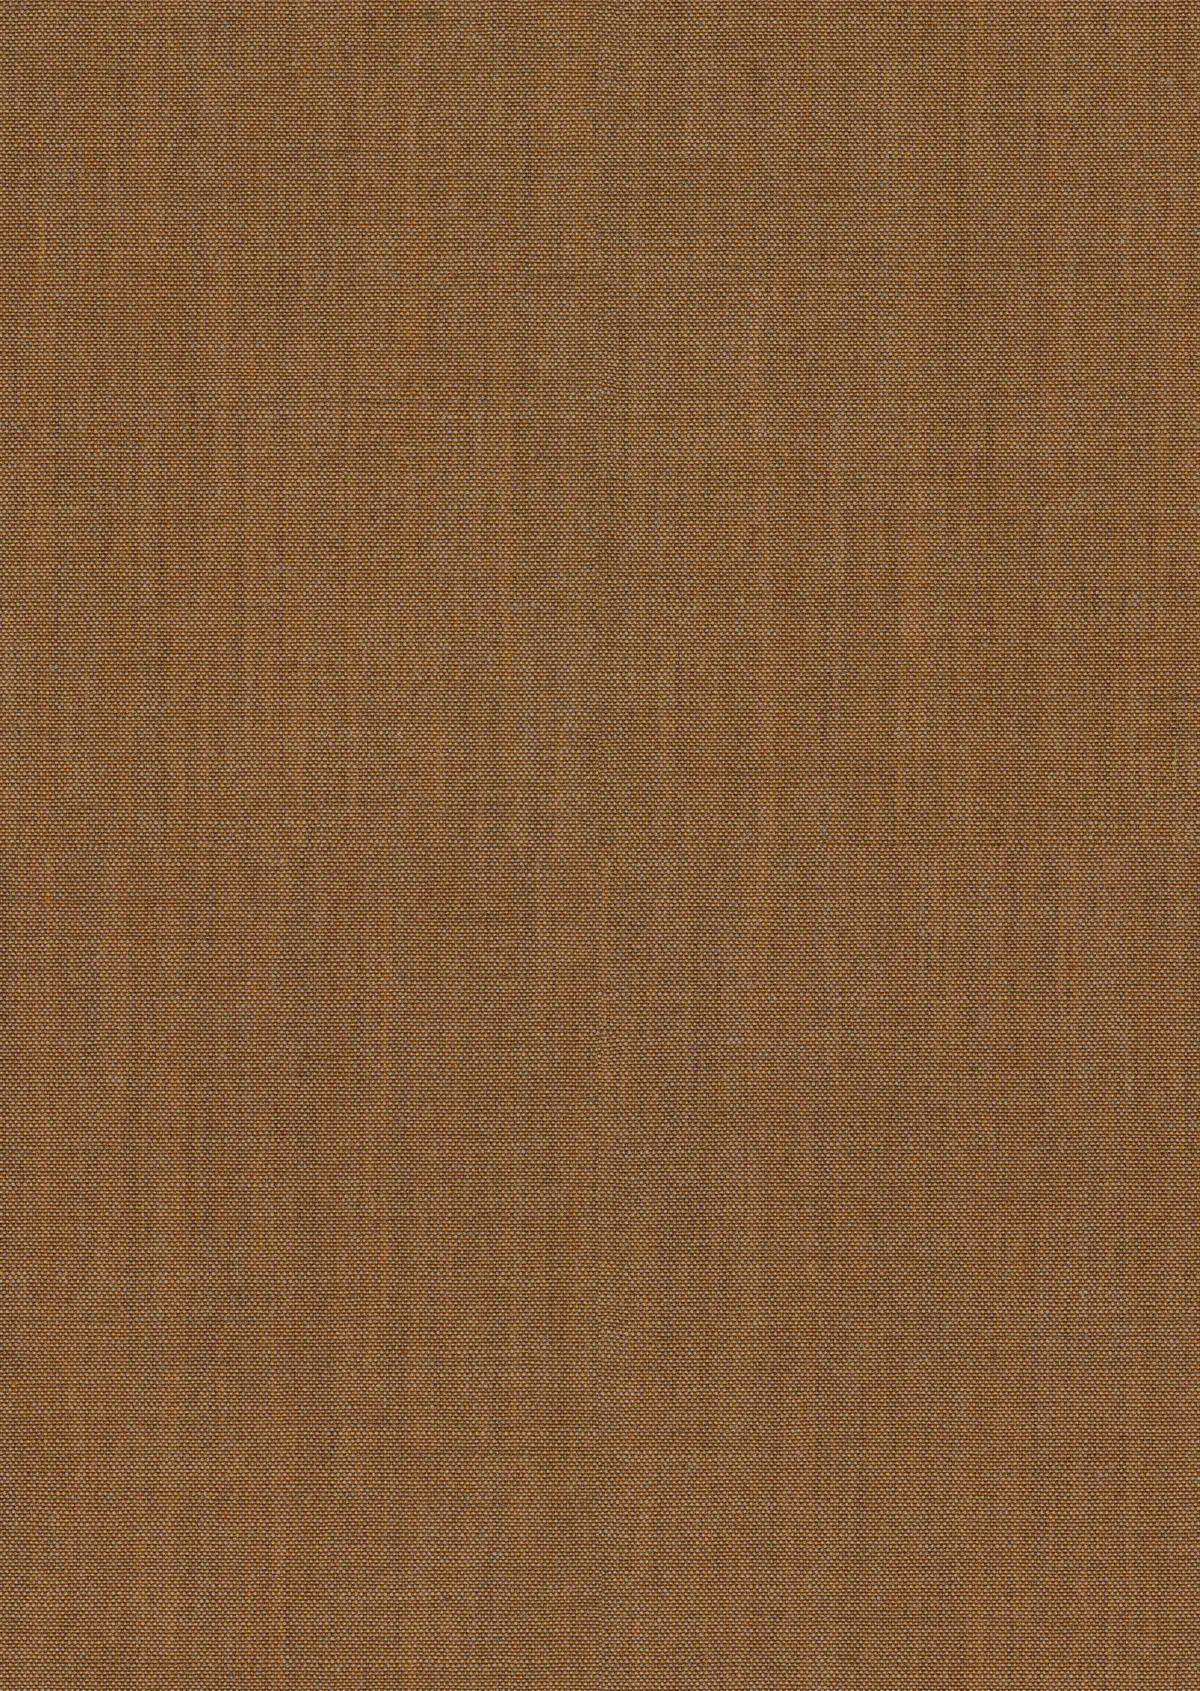 Fabric sample Remix 3 252 brown